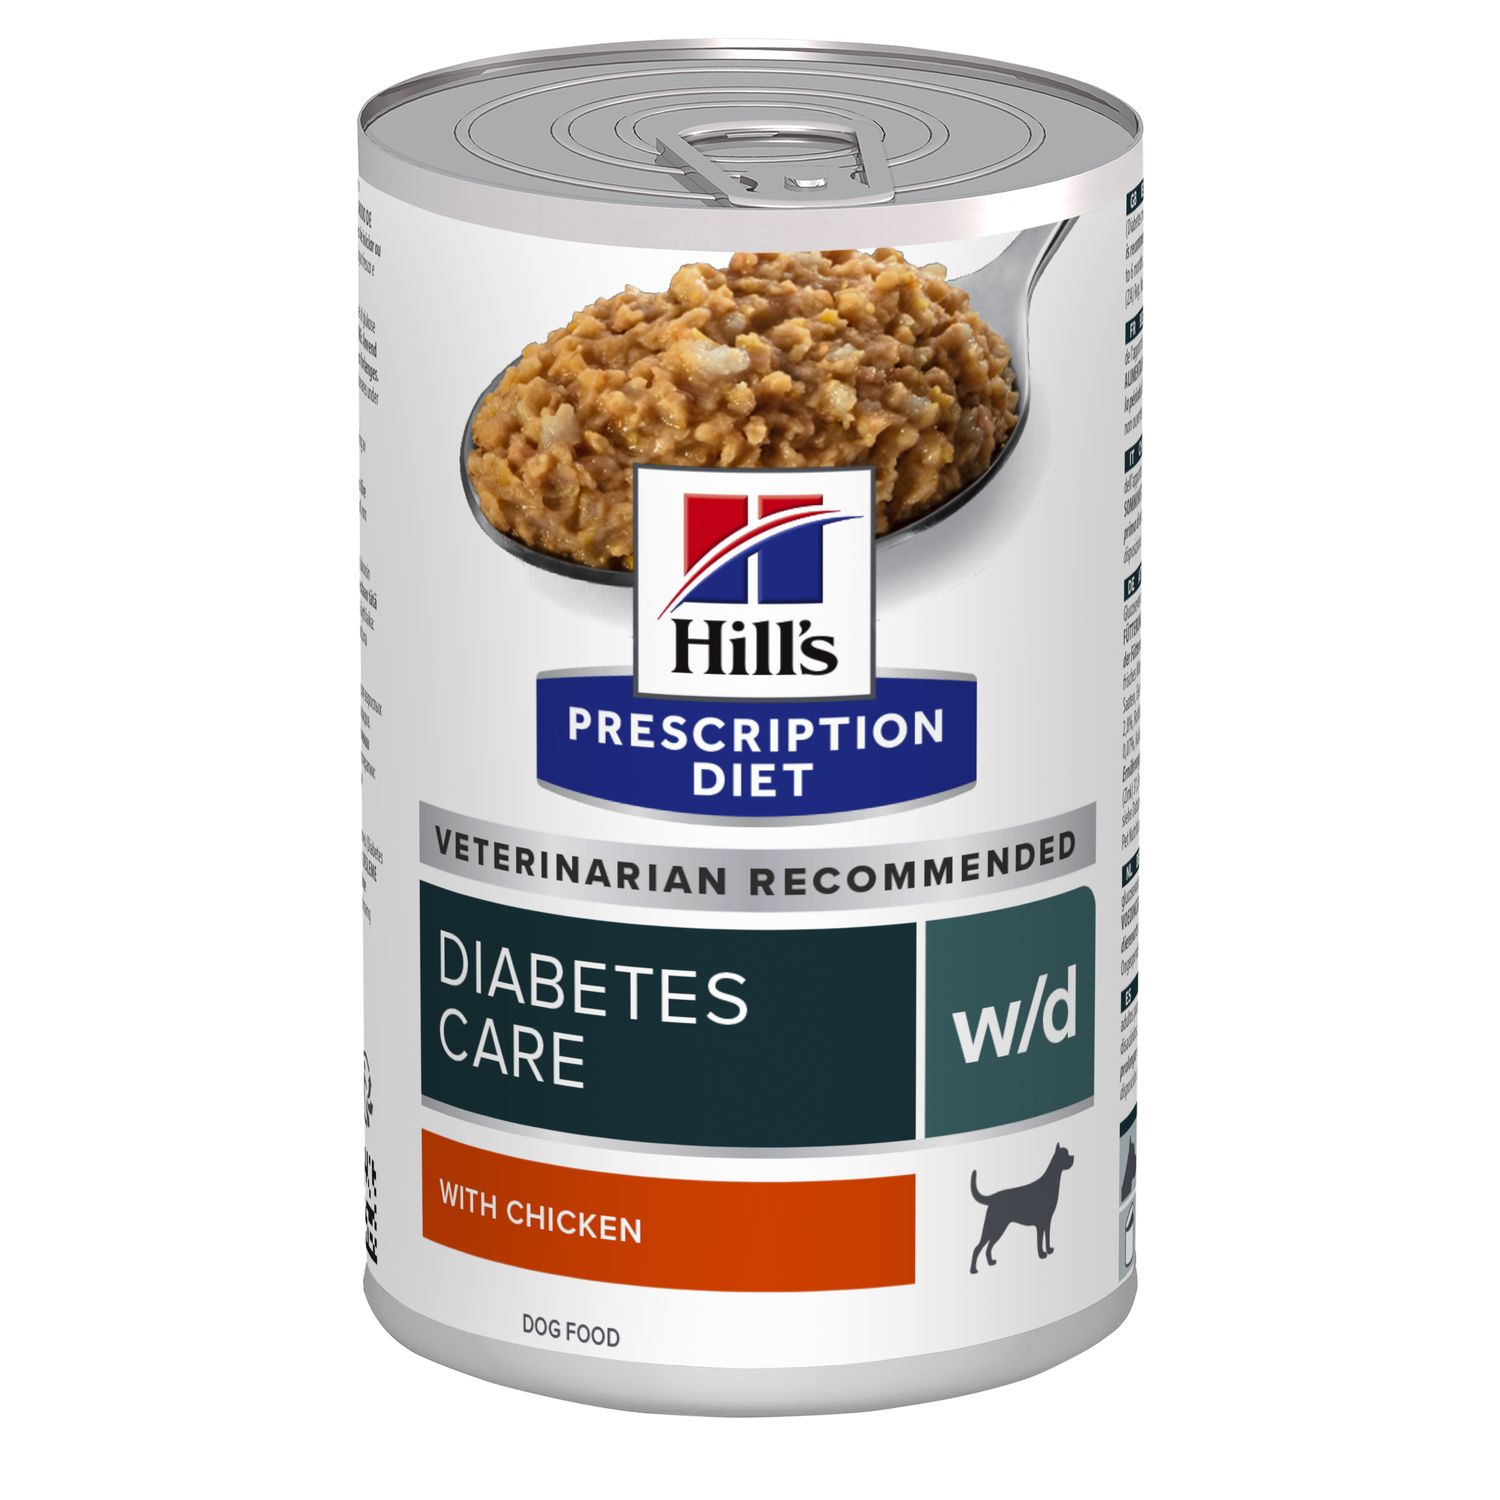 Hill's Prescription Diet W/d Dog Food With Chicken